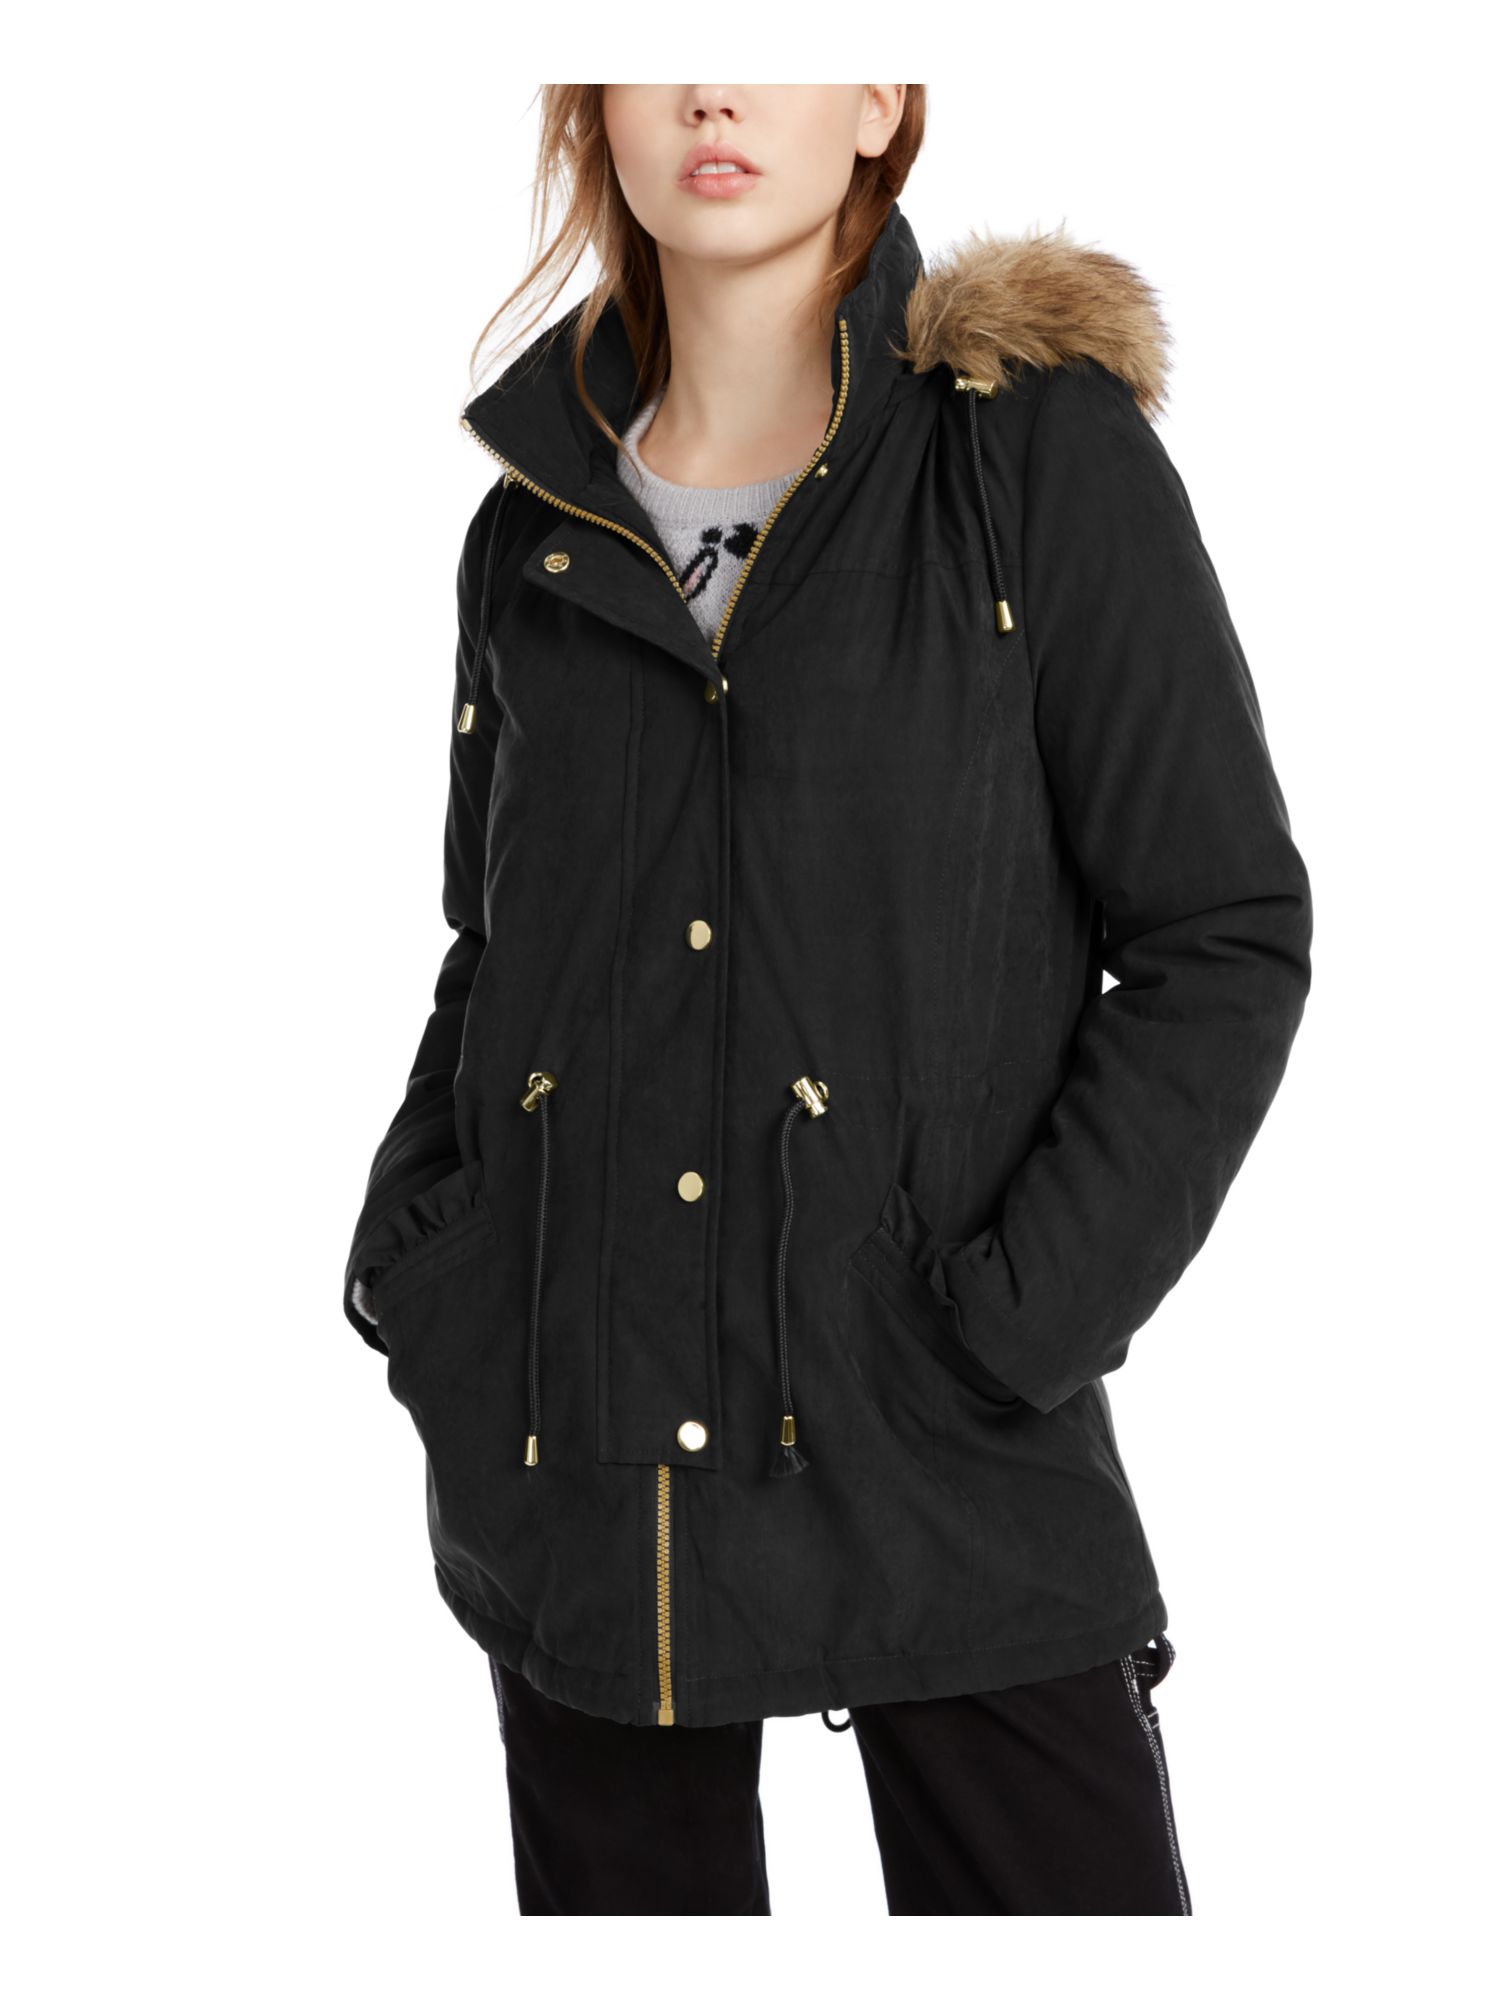 CELEBRITY PINK Womens Black Faux Fur Hood Parka Winter Jacket Coat Juniors M - image 1 of 4